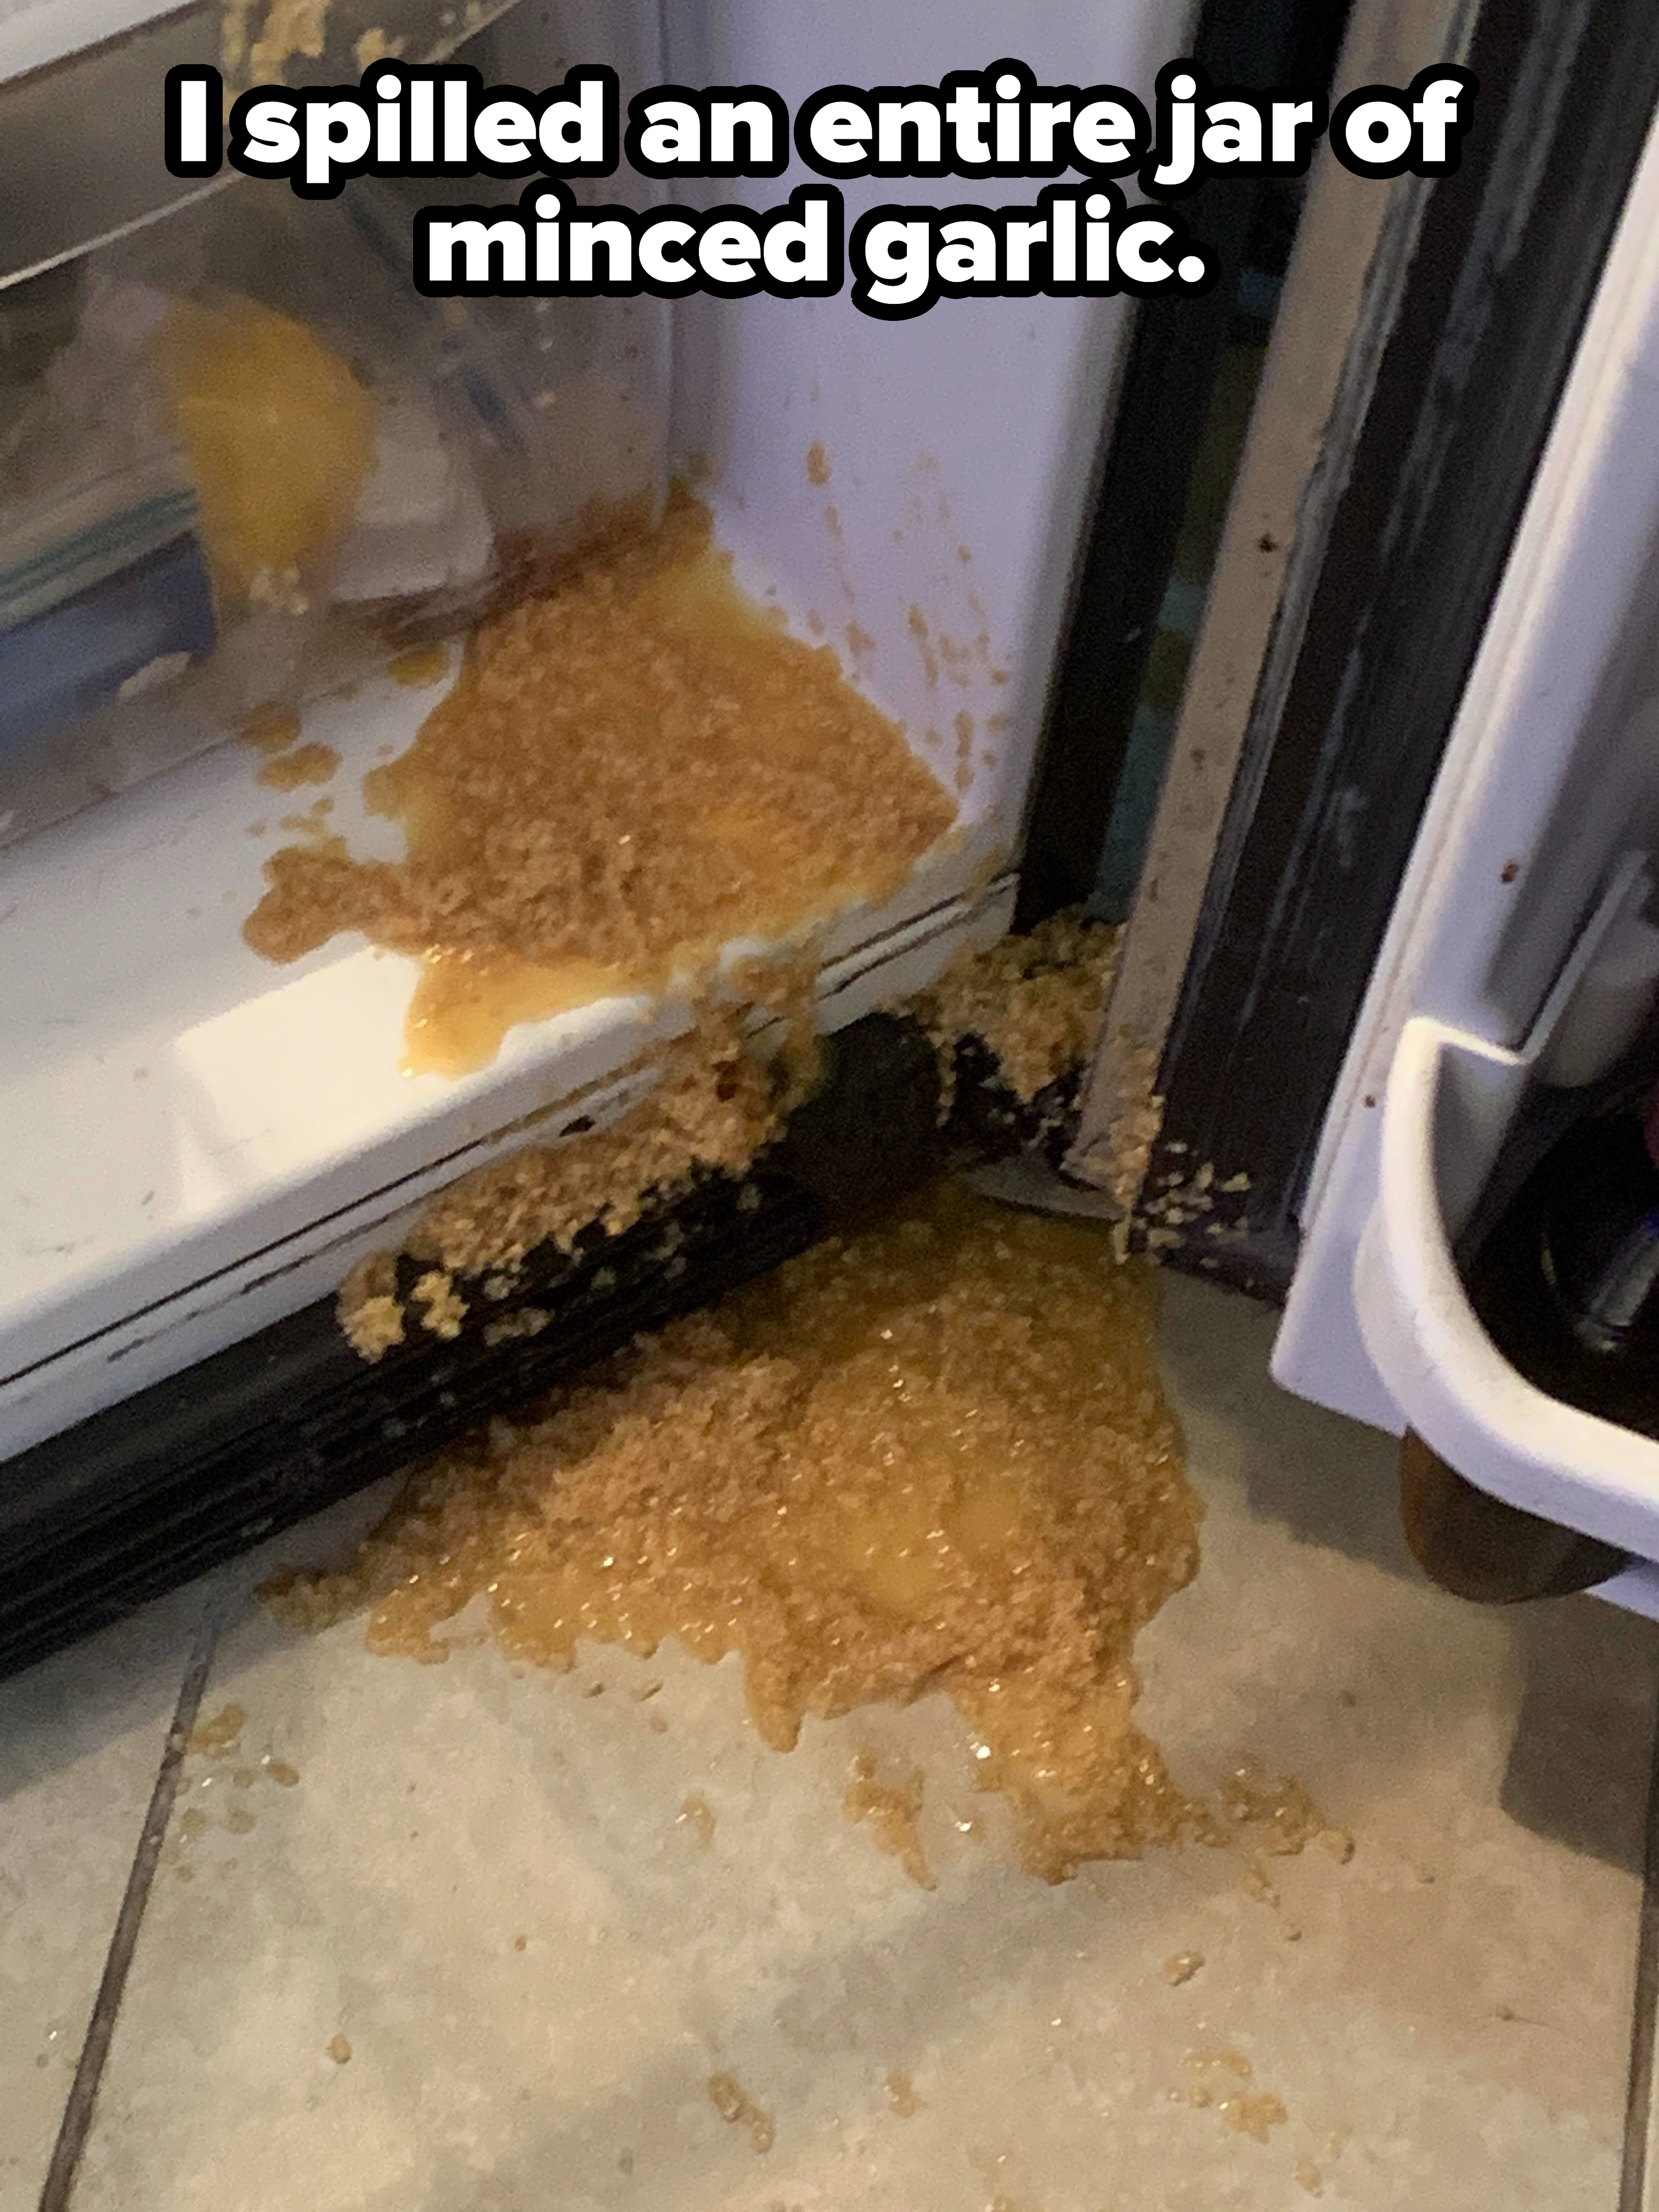 A jar of spilled minced garlic on the floor beside an open microwave door